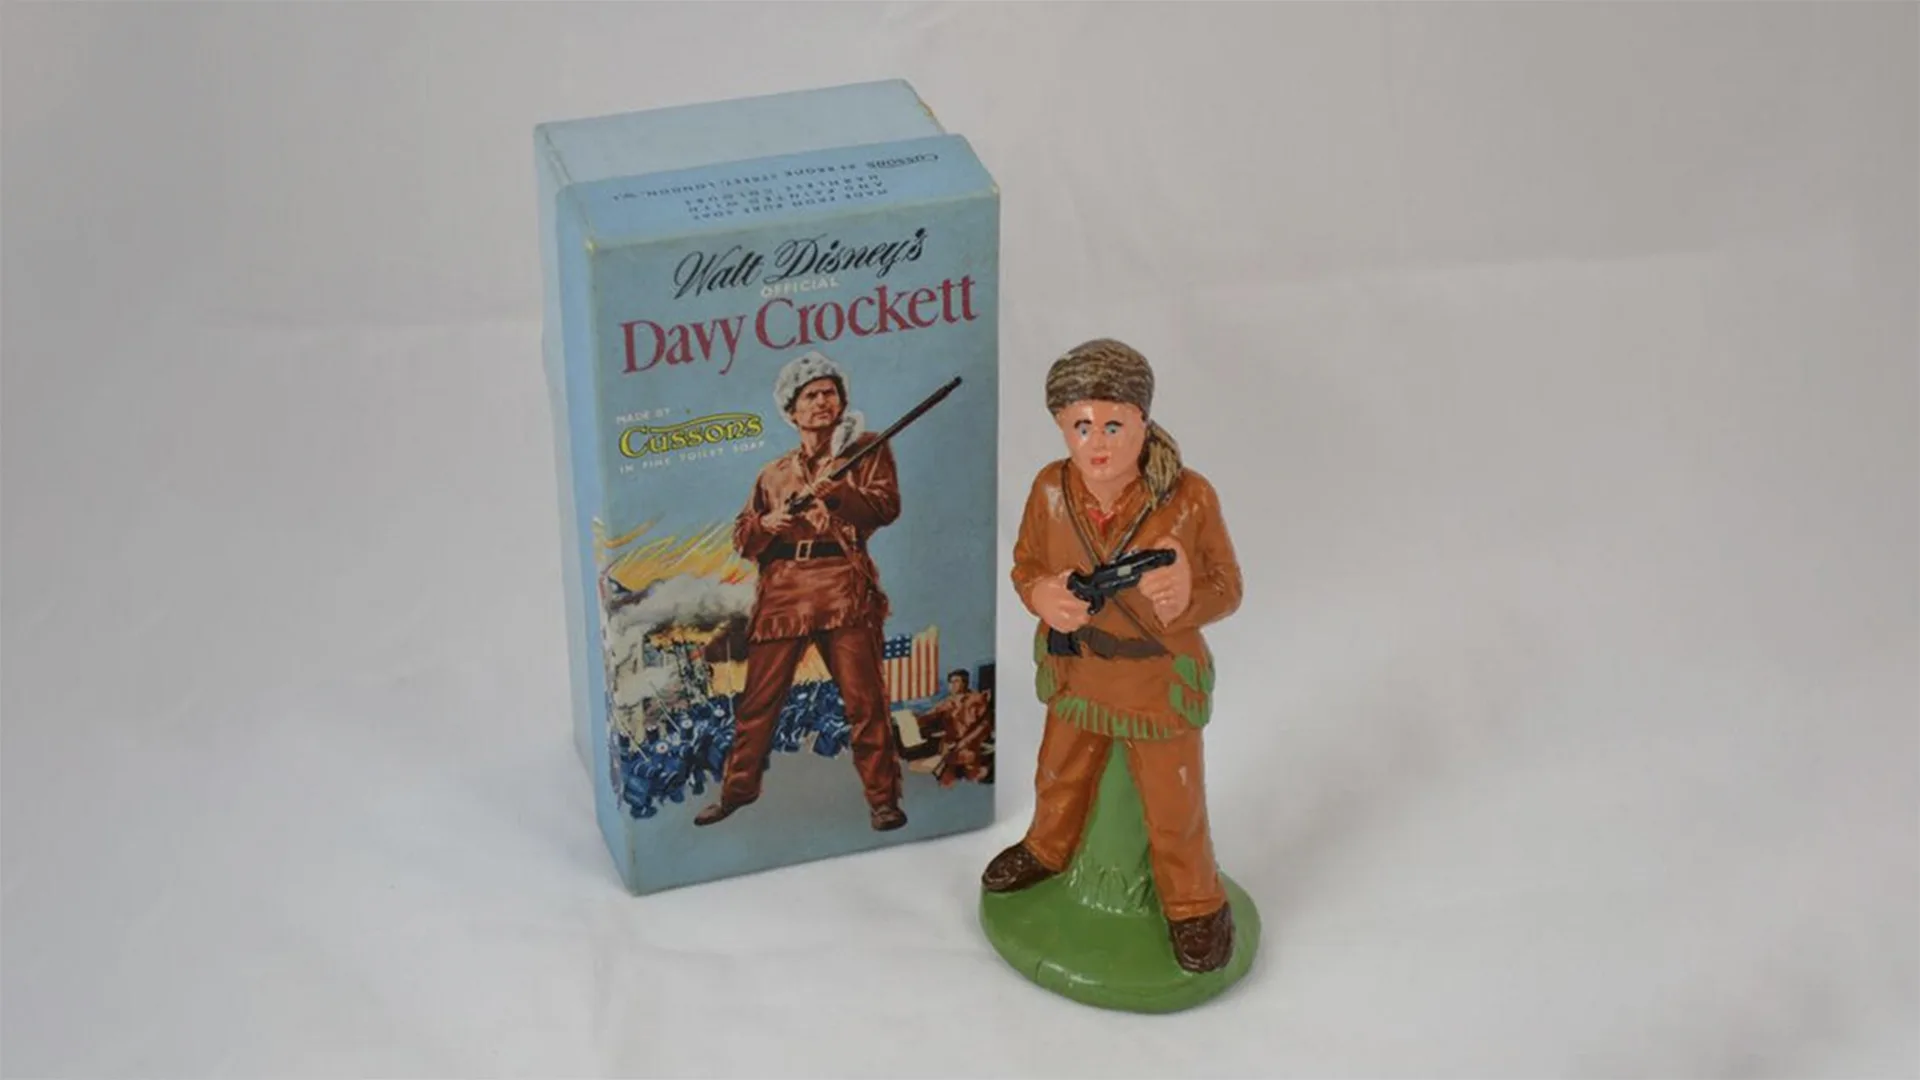 Walt Disney's Davy Crockett, a bar of soap